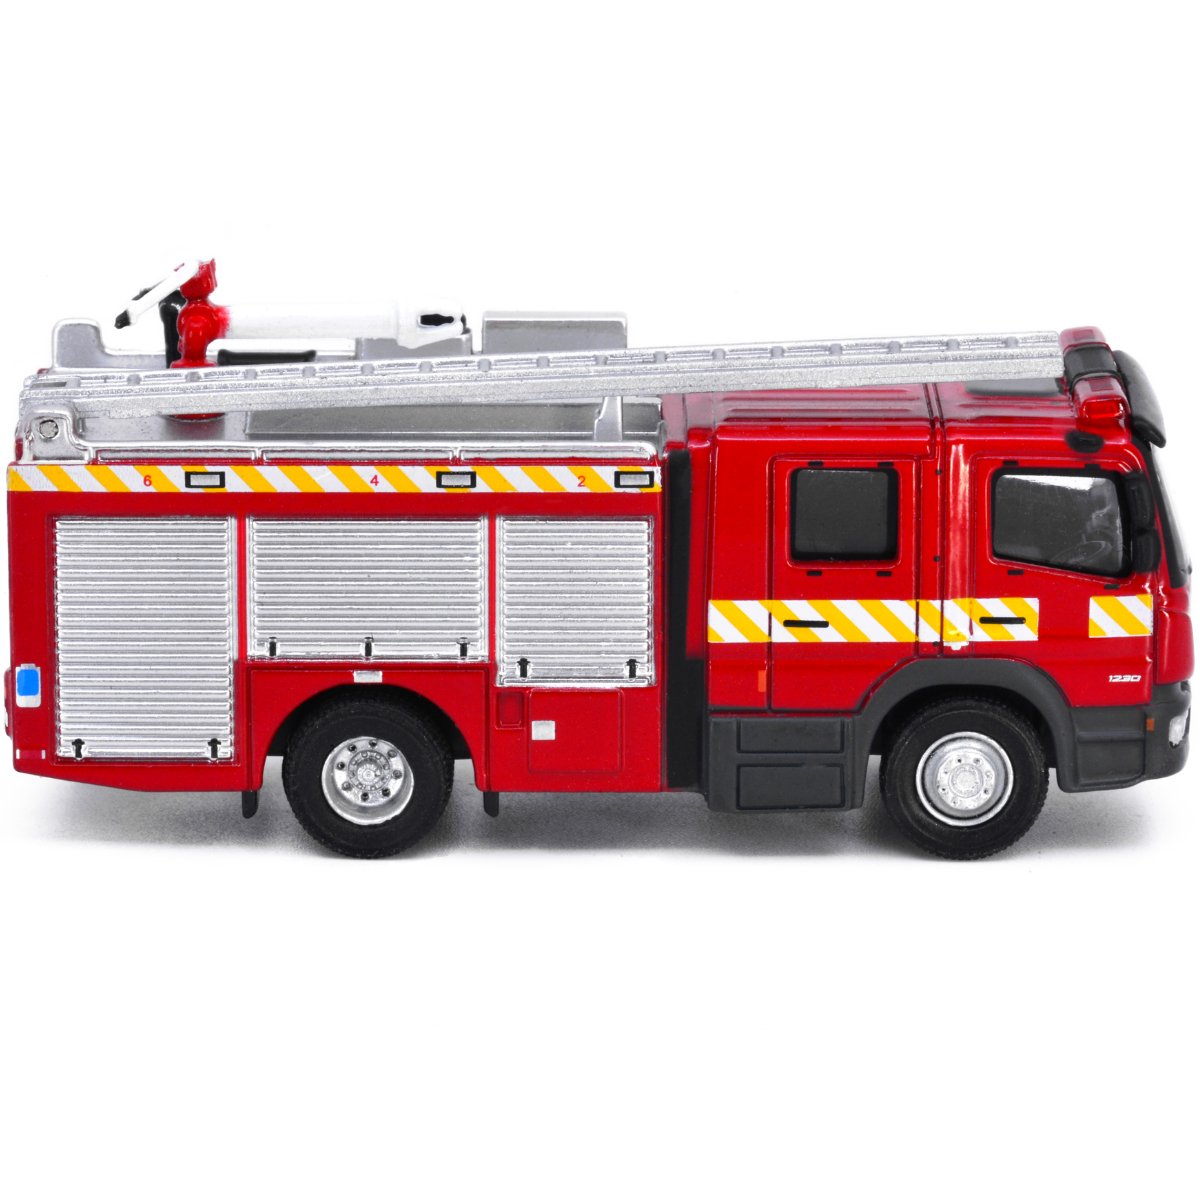 Tiny Models Mercedes Atego Macau Fire Engine Major Pump (1:87 Scale) - Phillips Hobbies